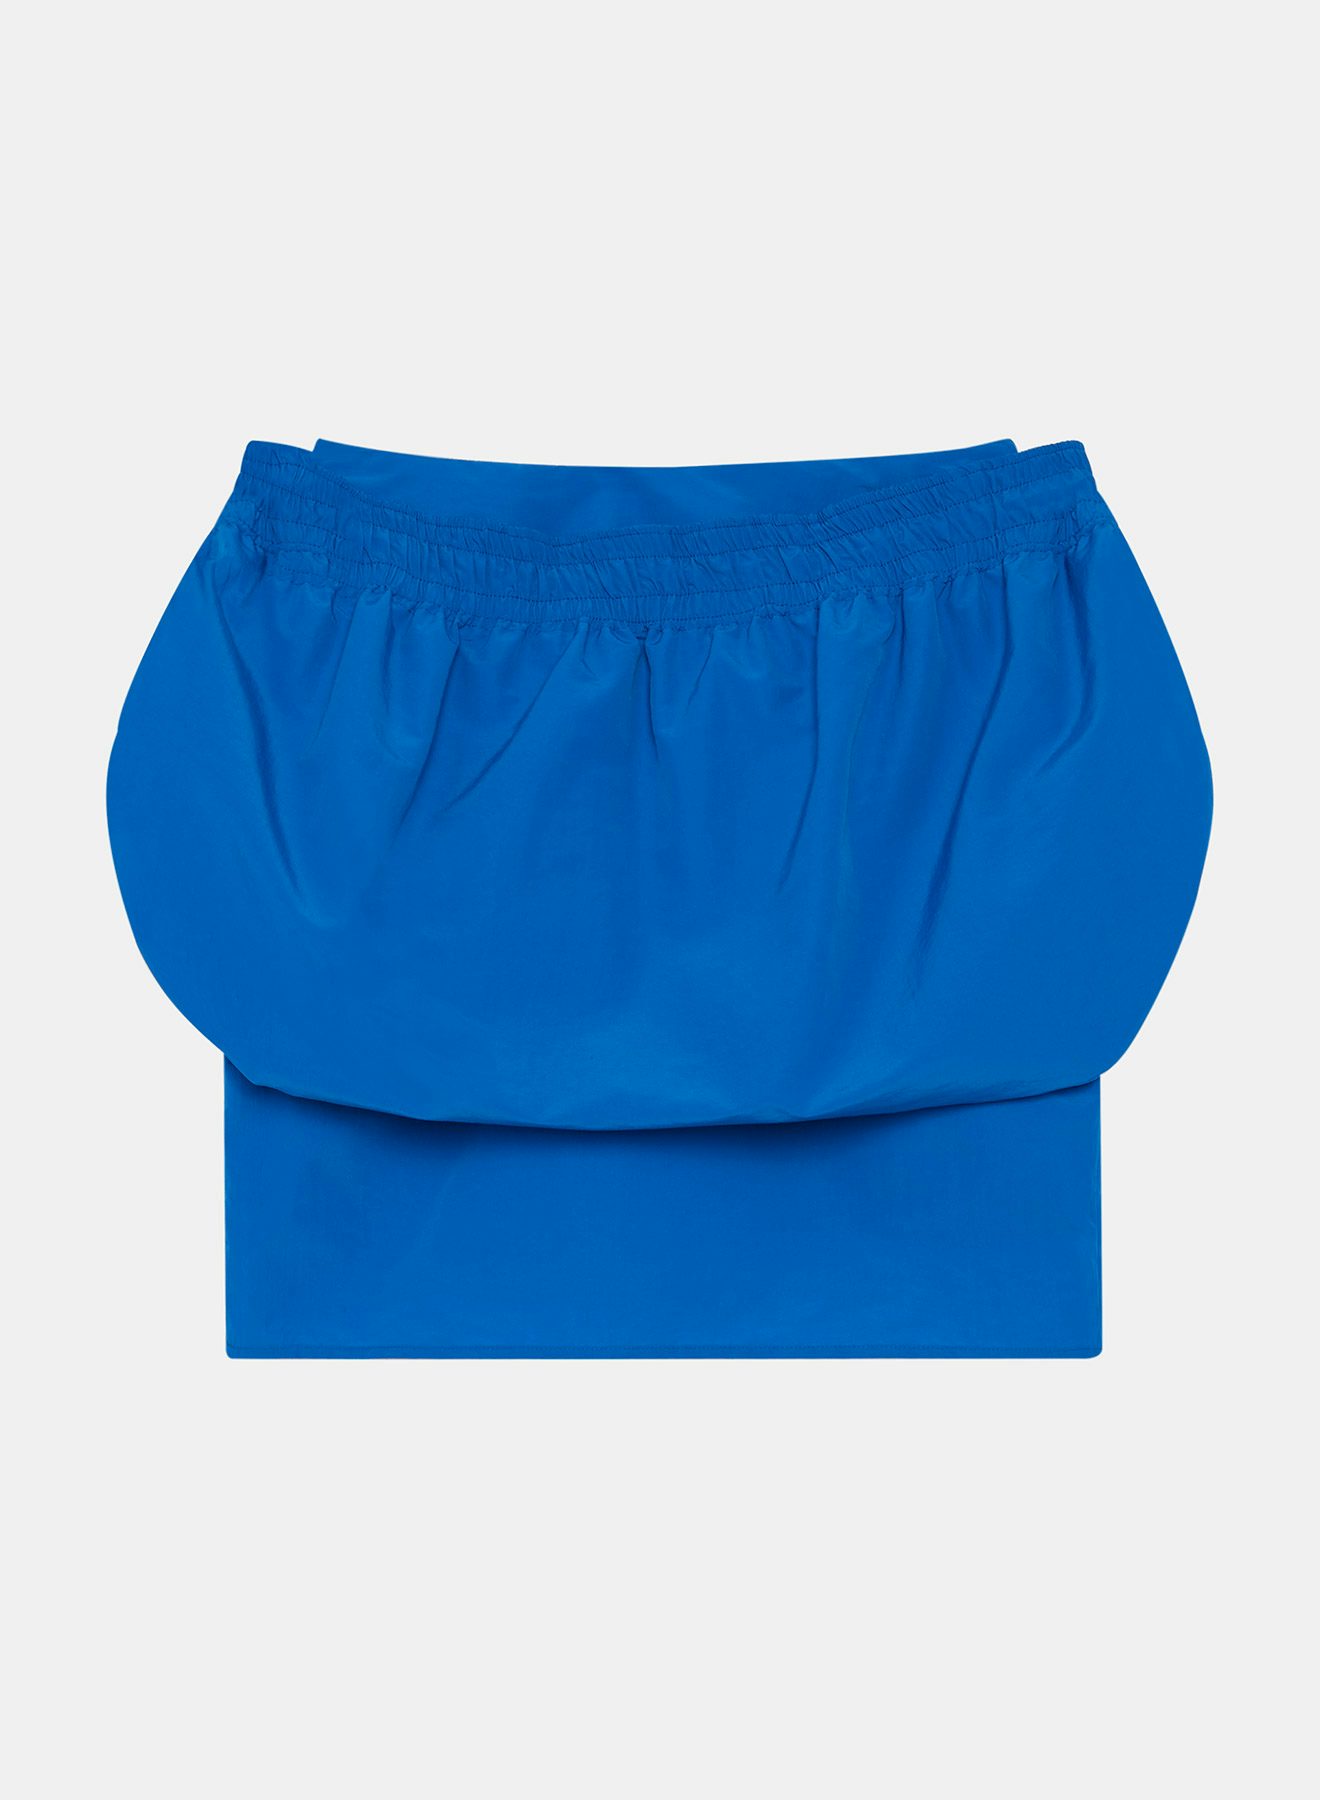 Ball Skirt with Drawstring in Electric Blue Poplin - Nina Ricci